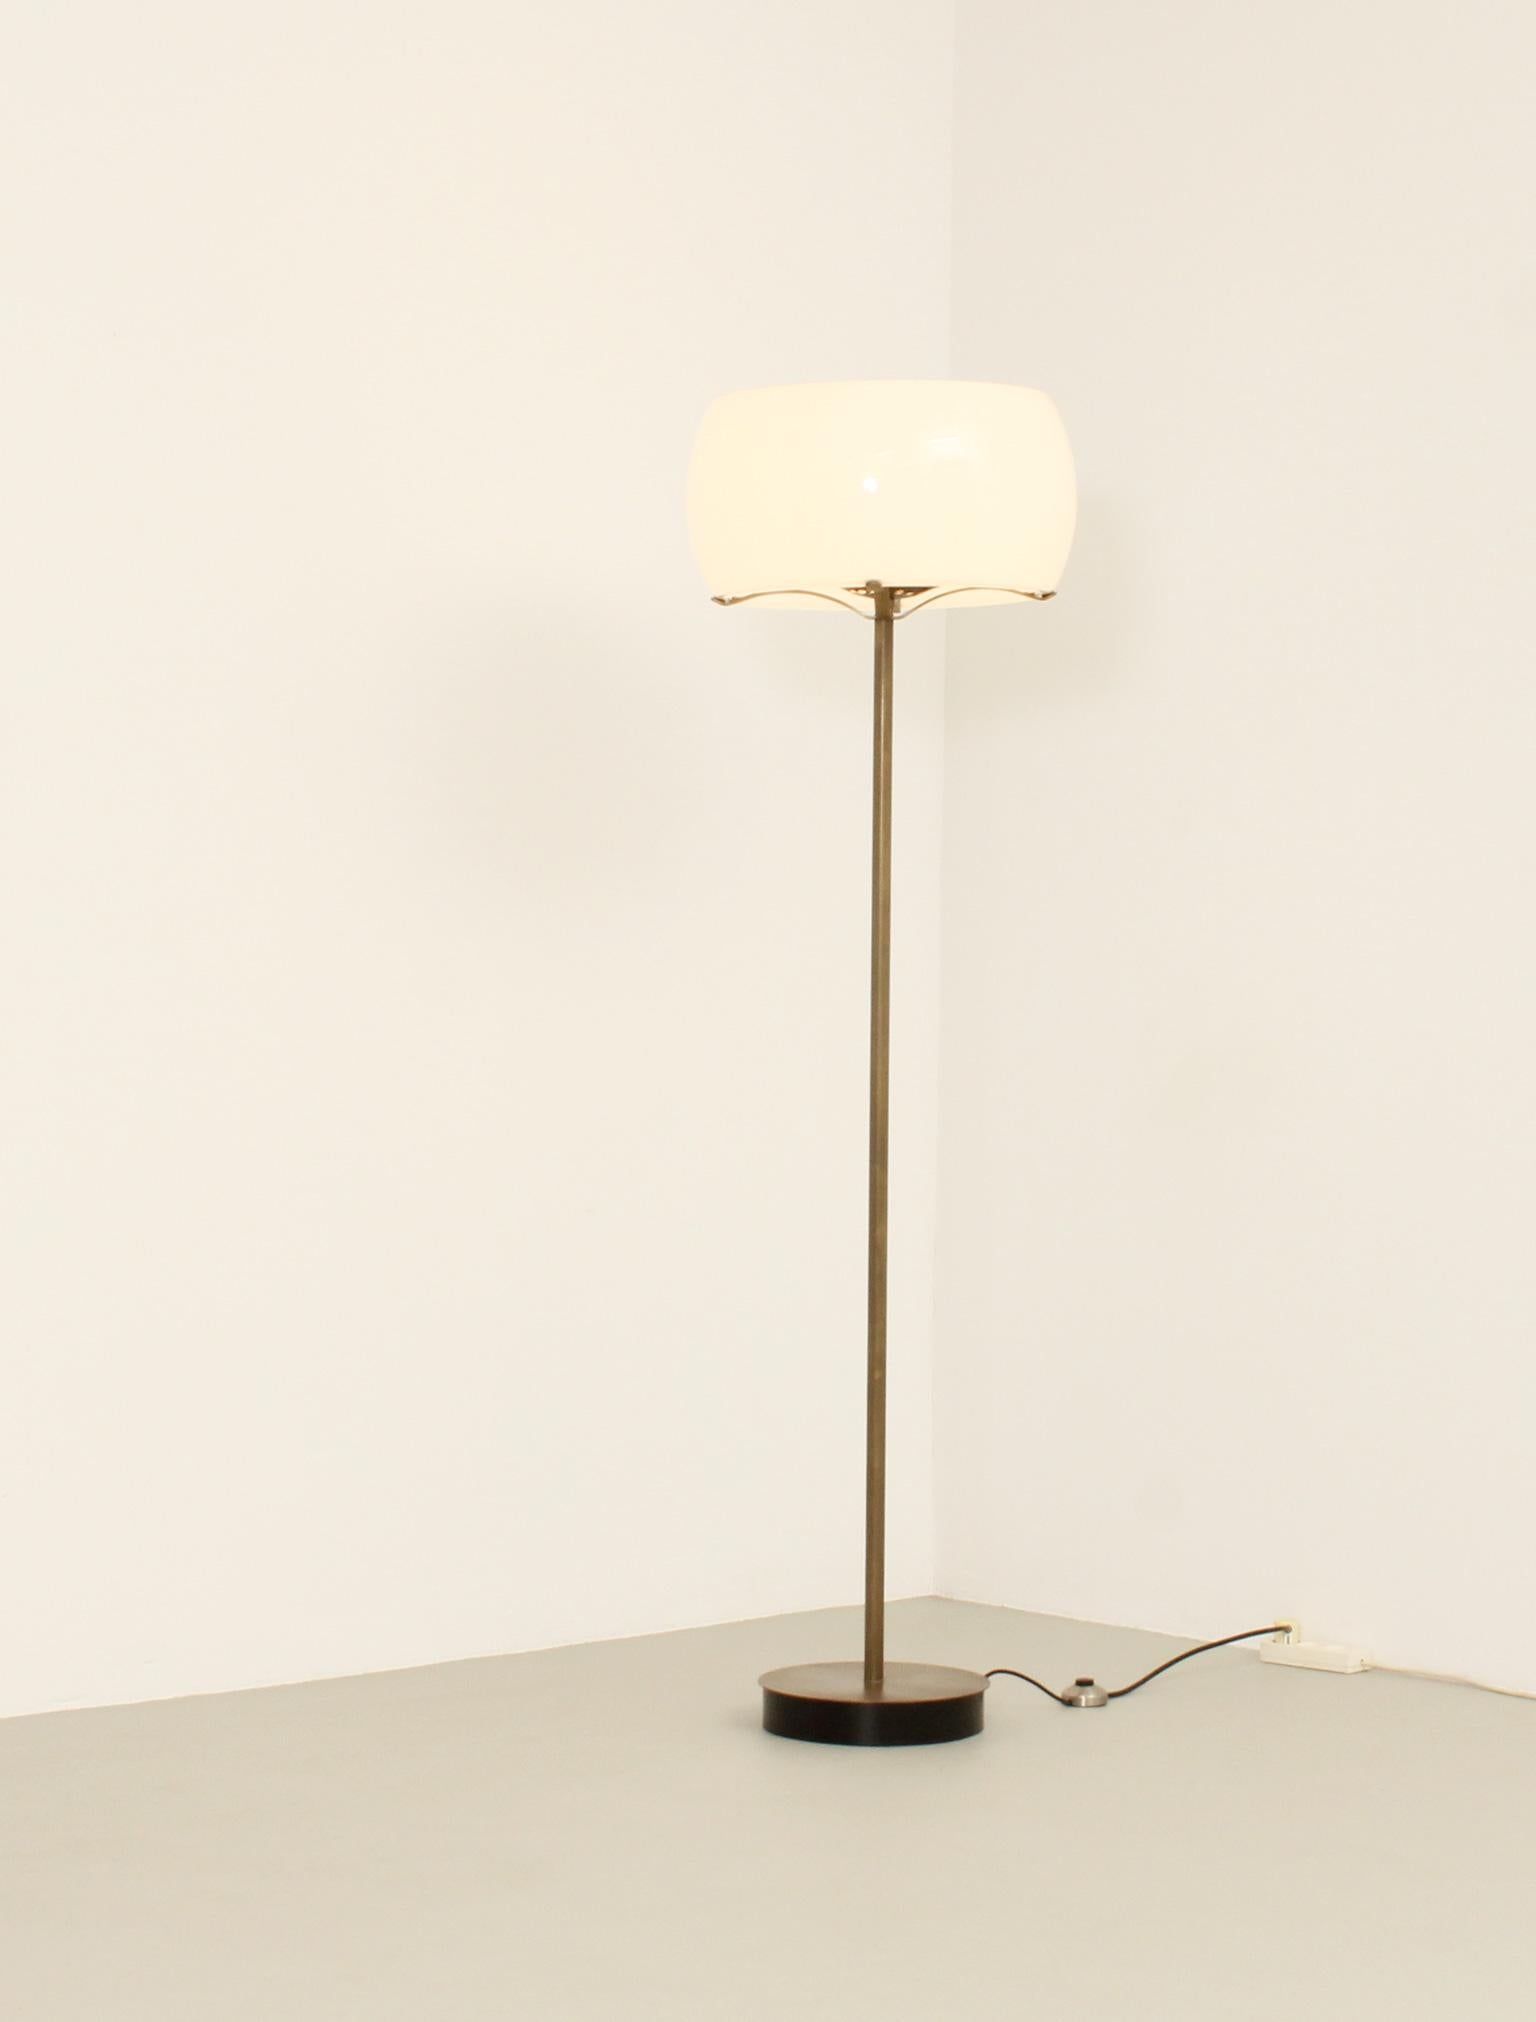 Clitunno Floor Lamp in Bronze Edition by Vico Magistretti for Artemide, 1963 For Sale 7